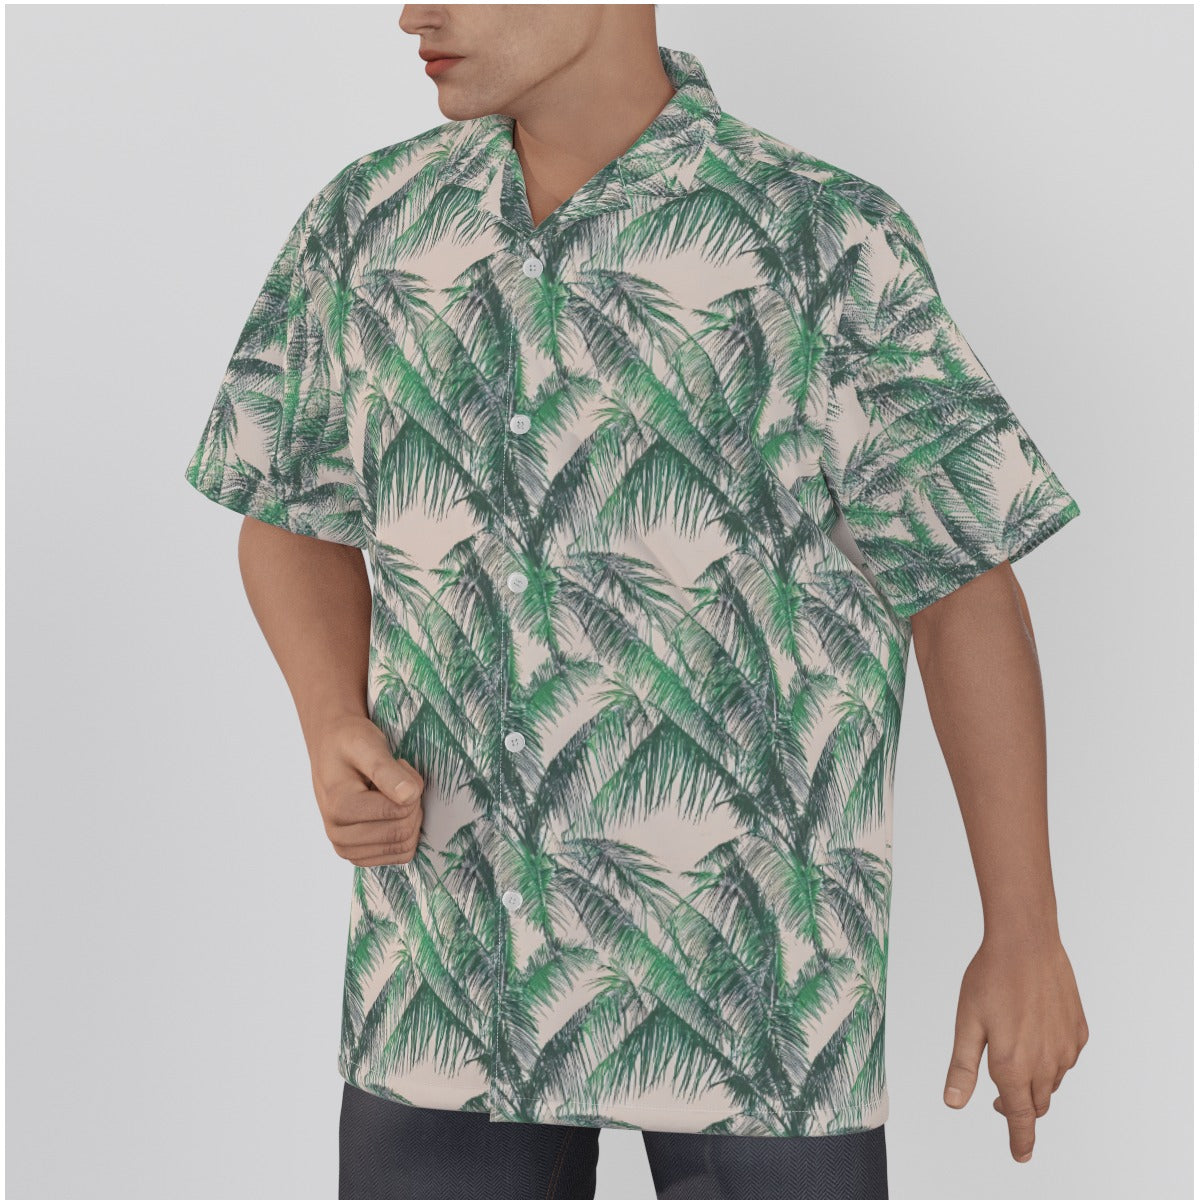 The Caribbean Tropical Palm Men's Hawaiian Shirt